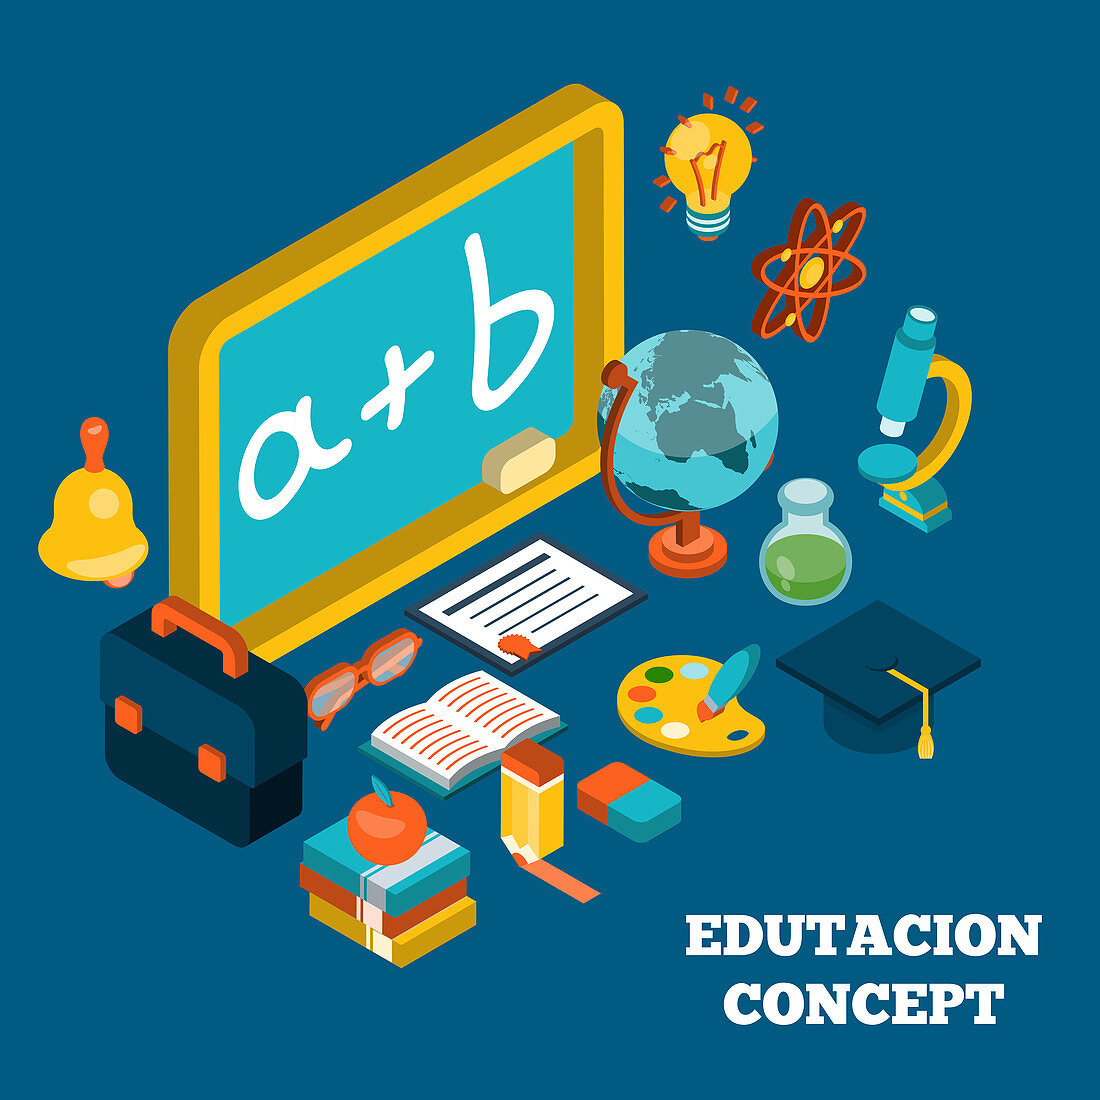 Education, illustration